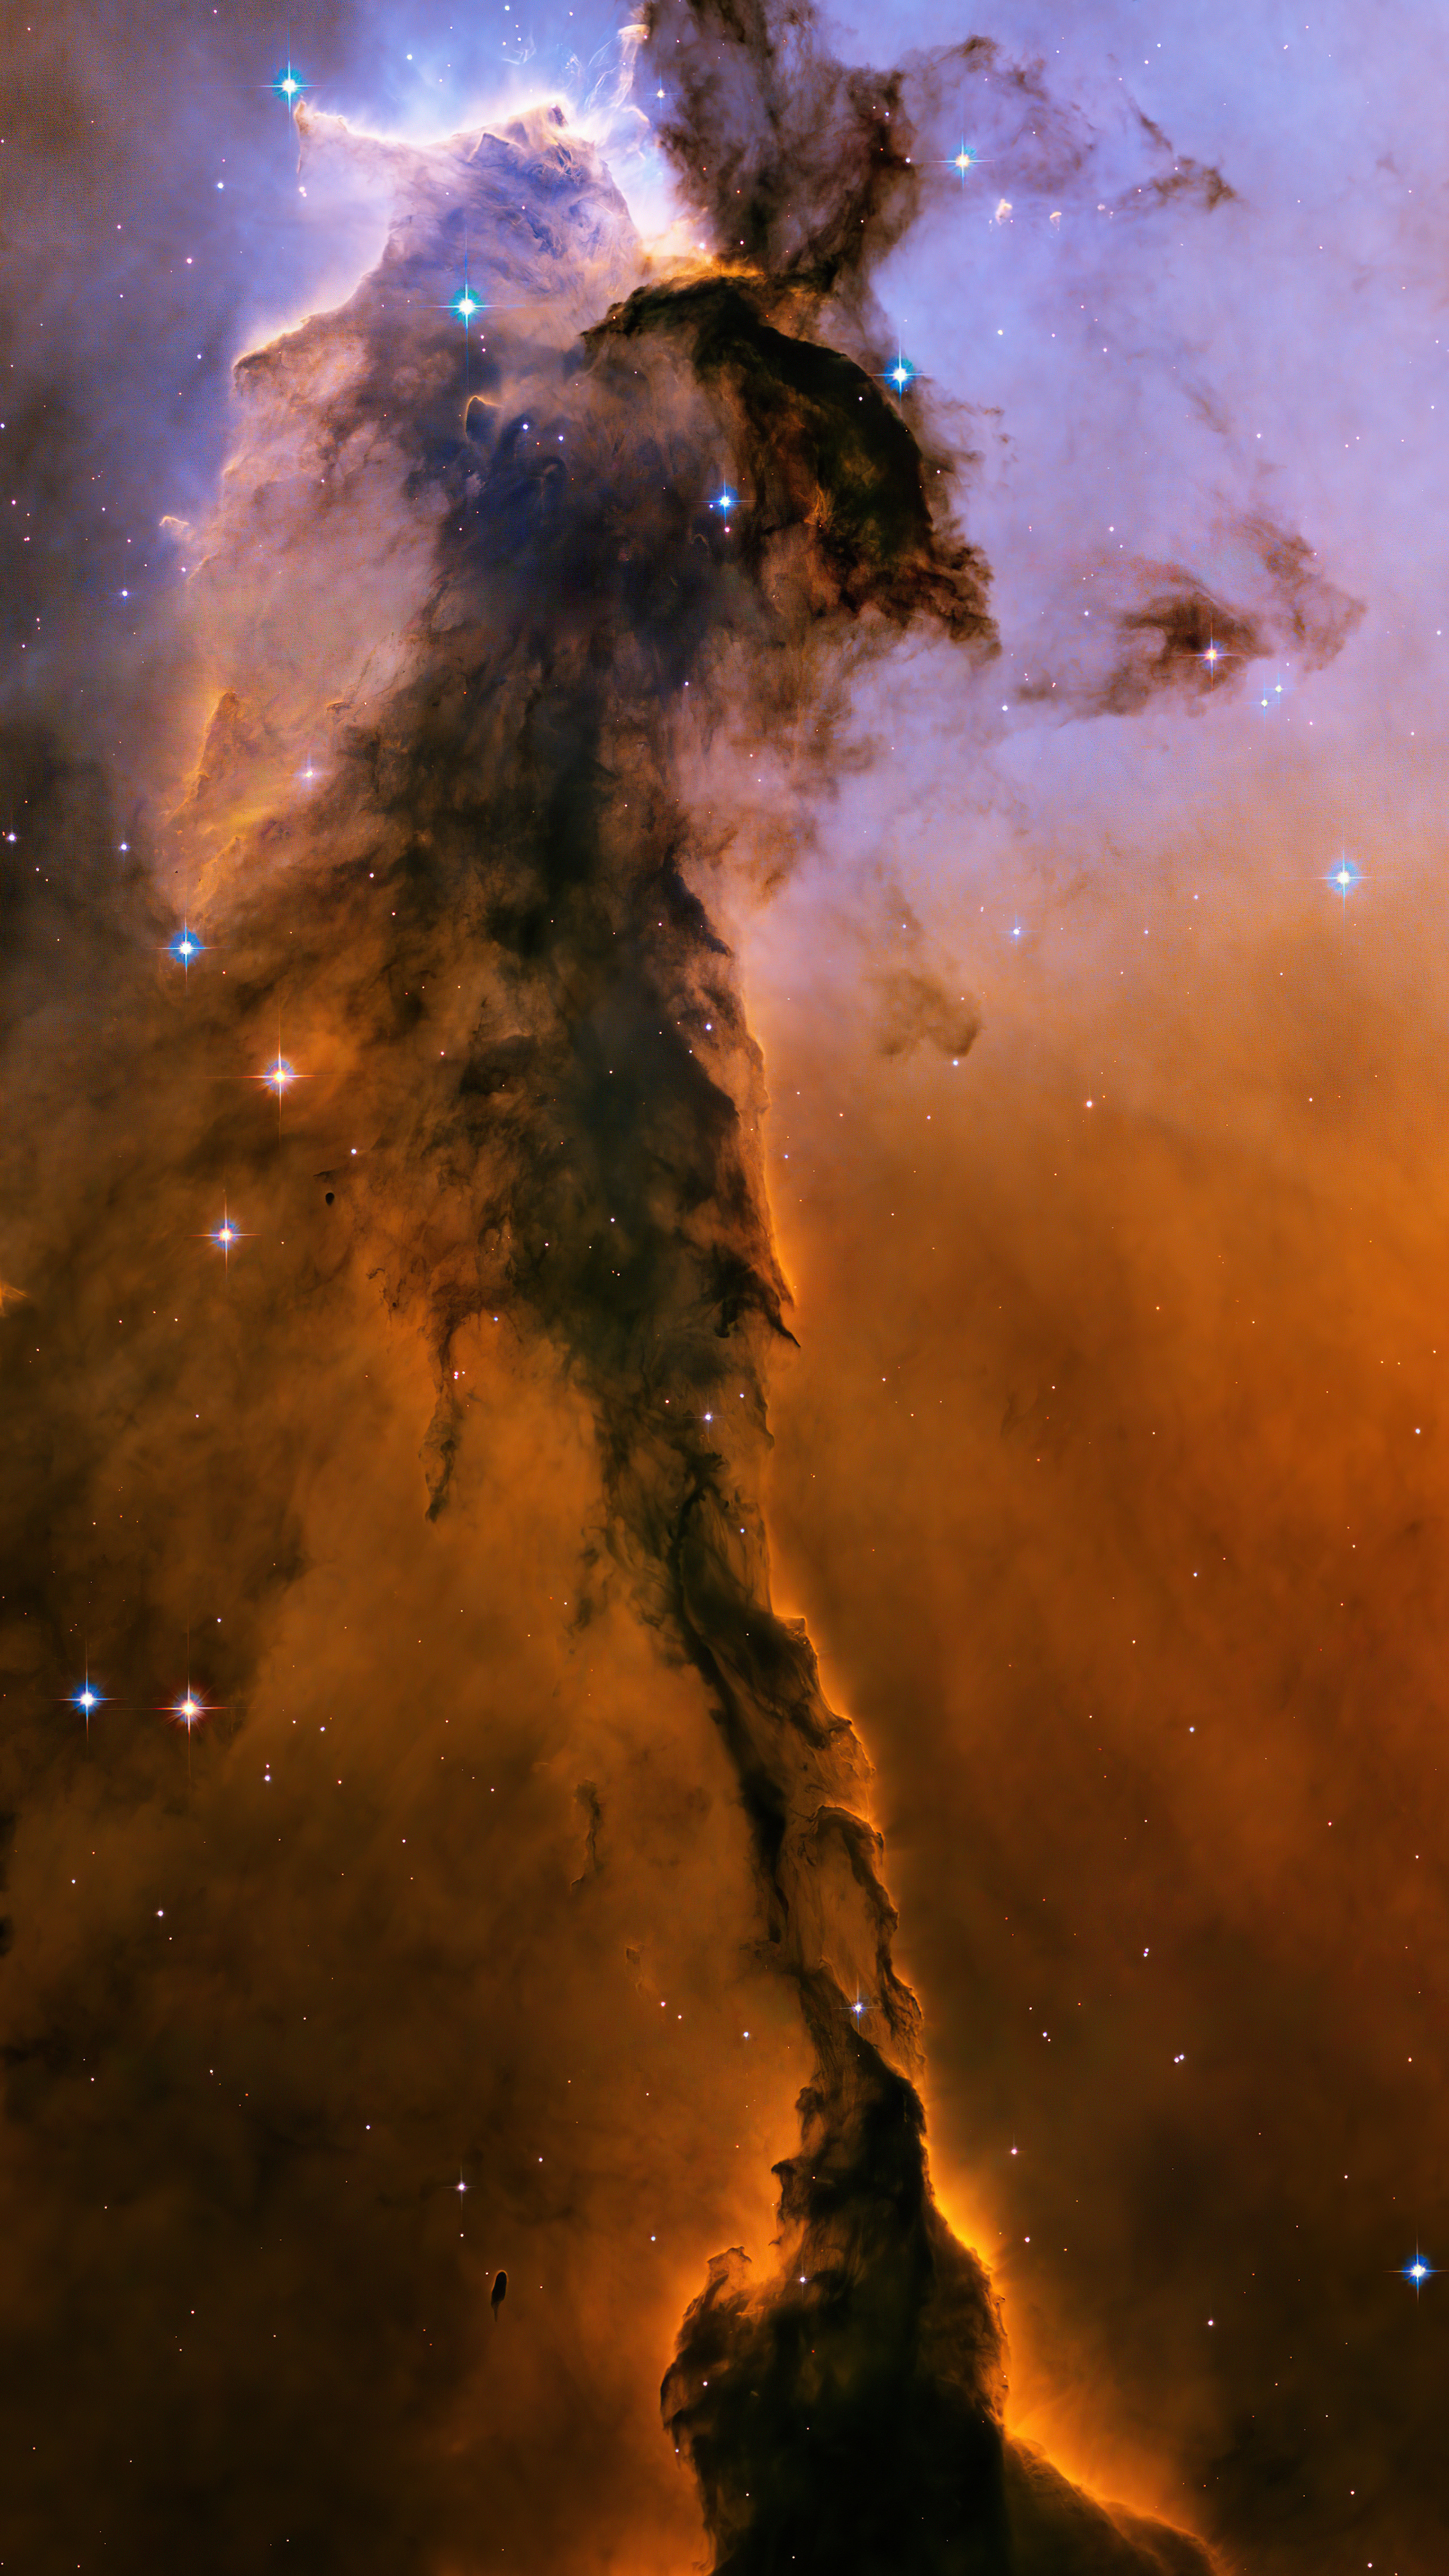 Eagle Nebula 1080P Wallpapers